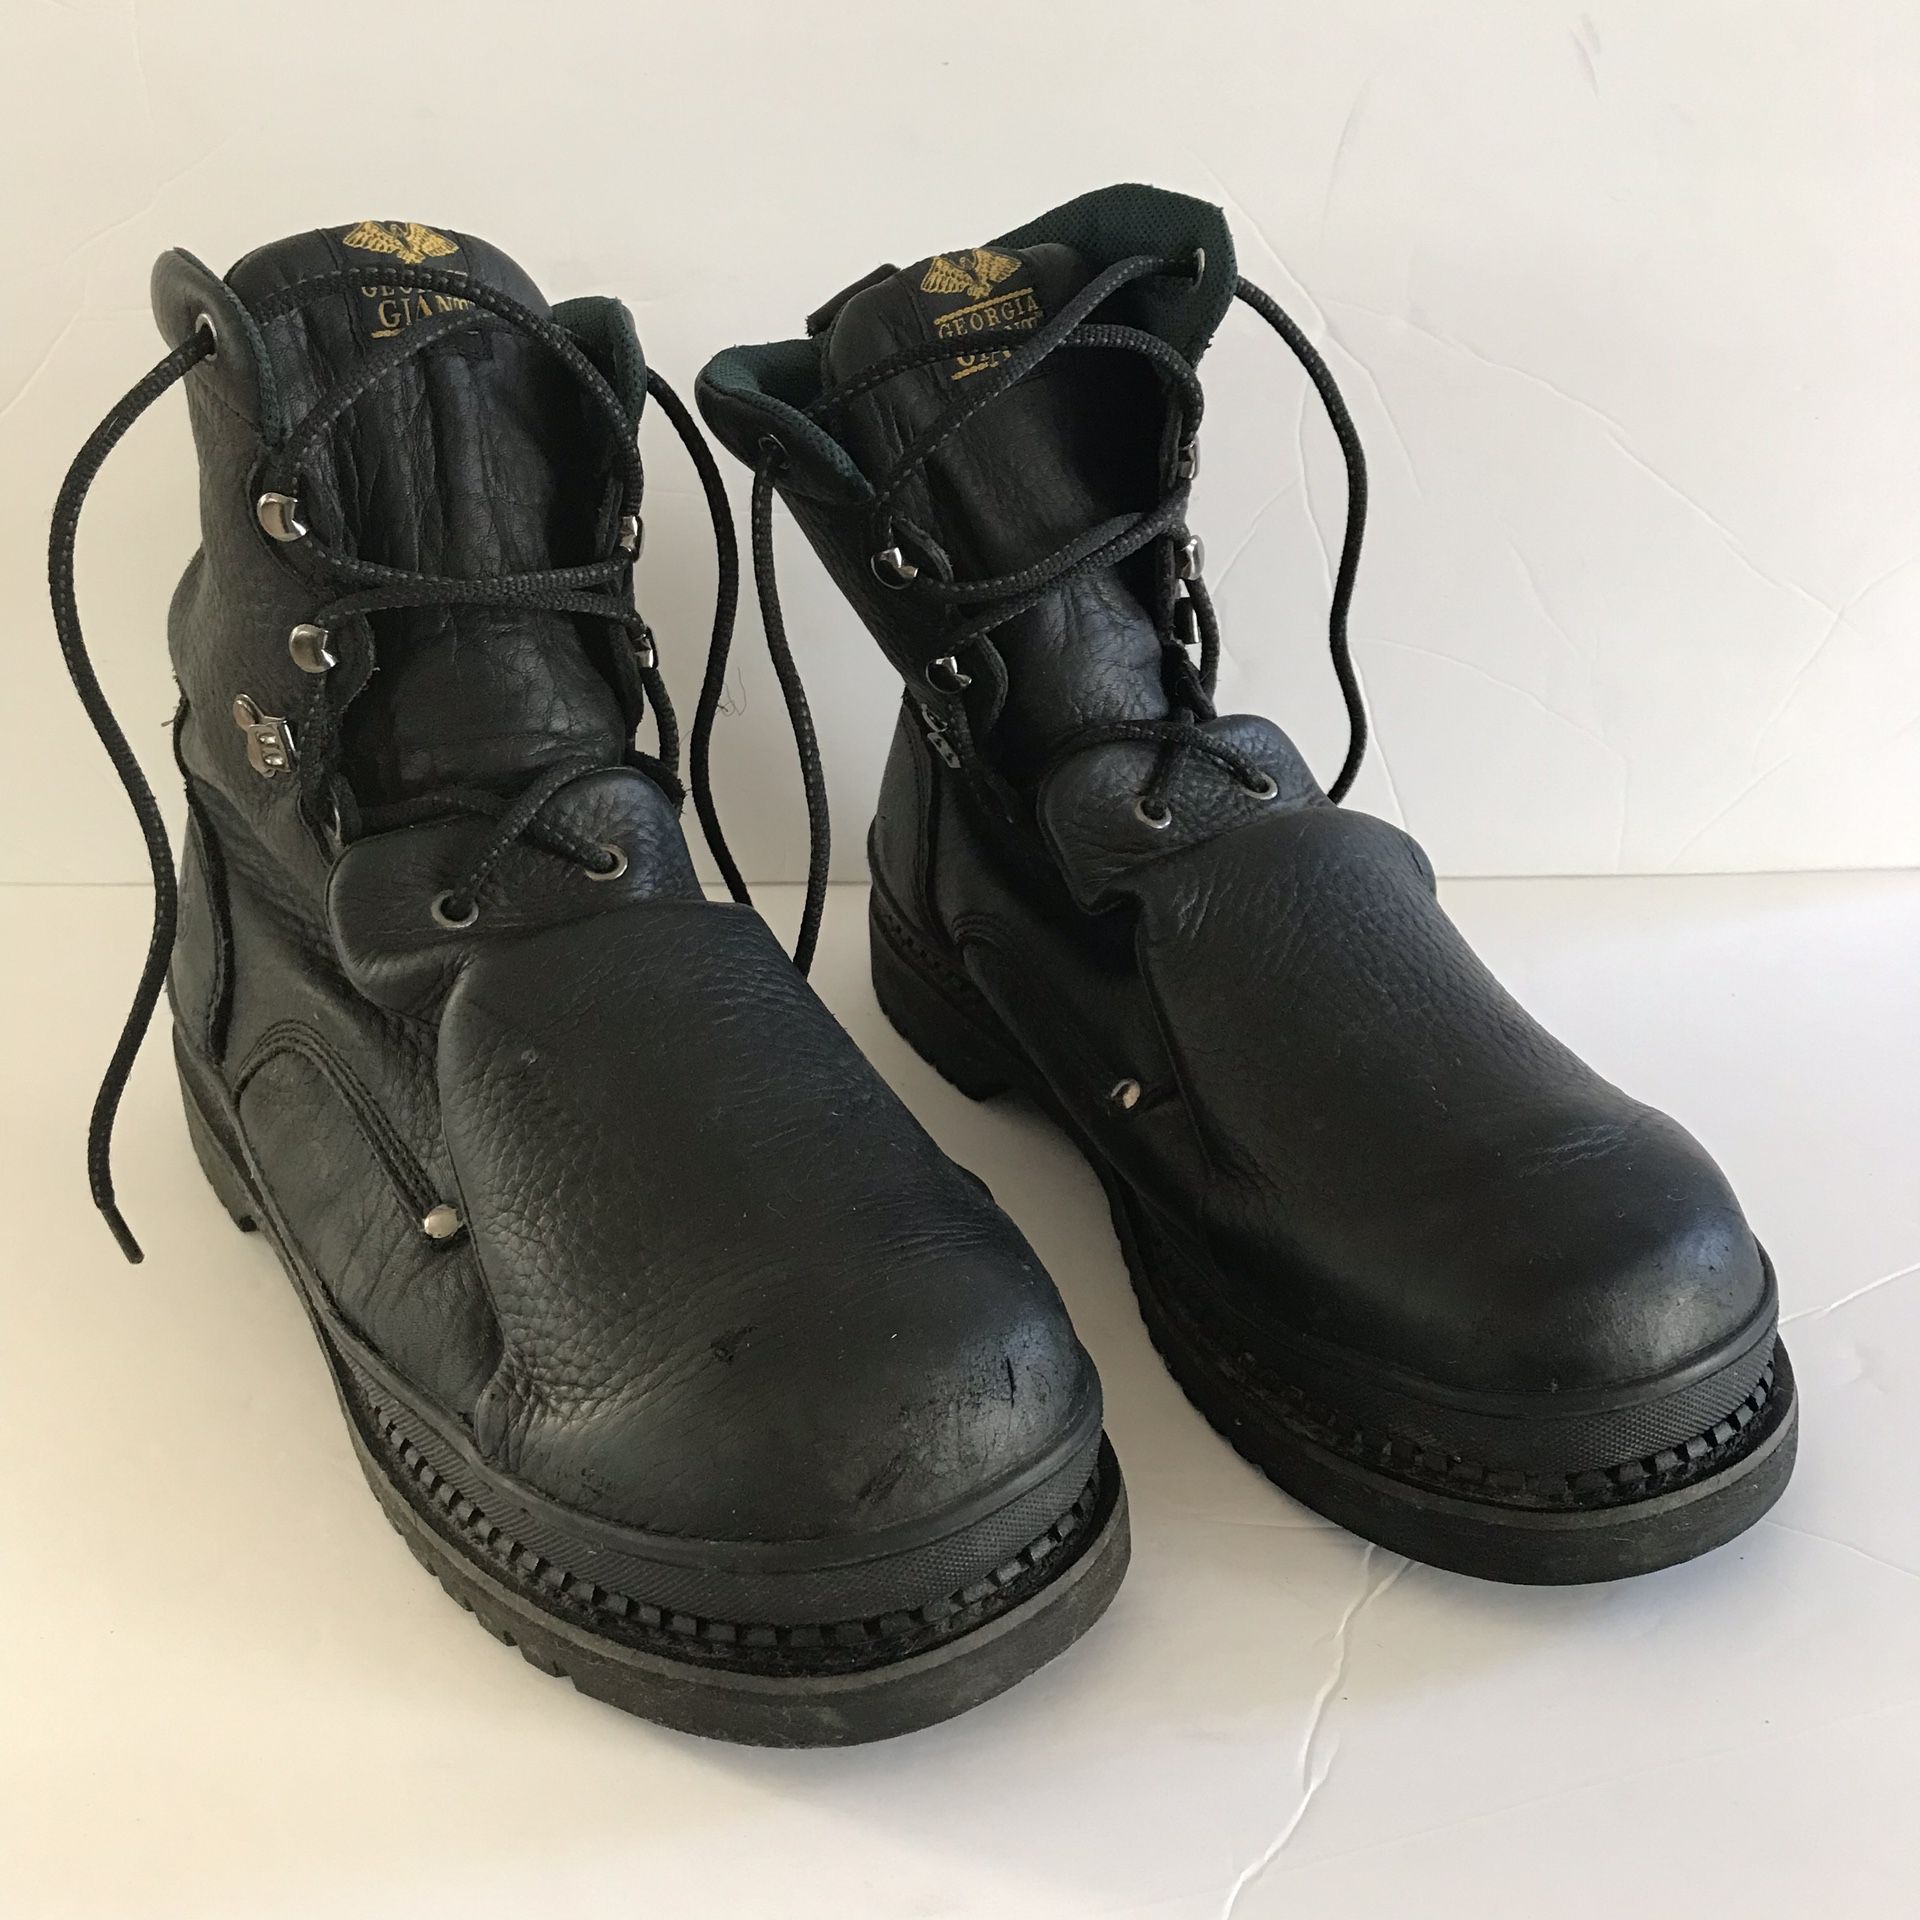 Georgia Boots: Metatarsal Steel Toe Black Leather Men Work Boots G8380 Size 13W